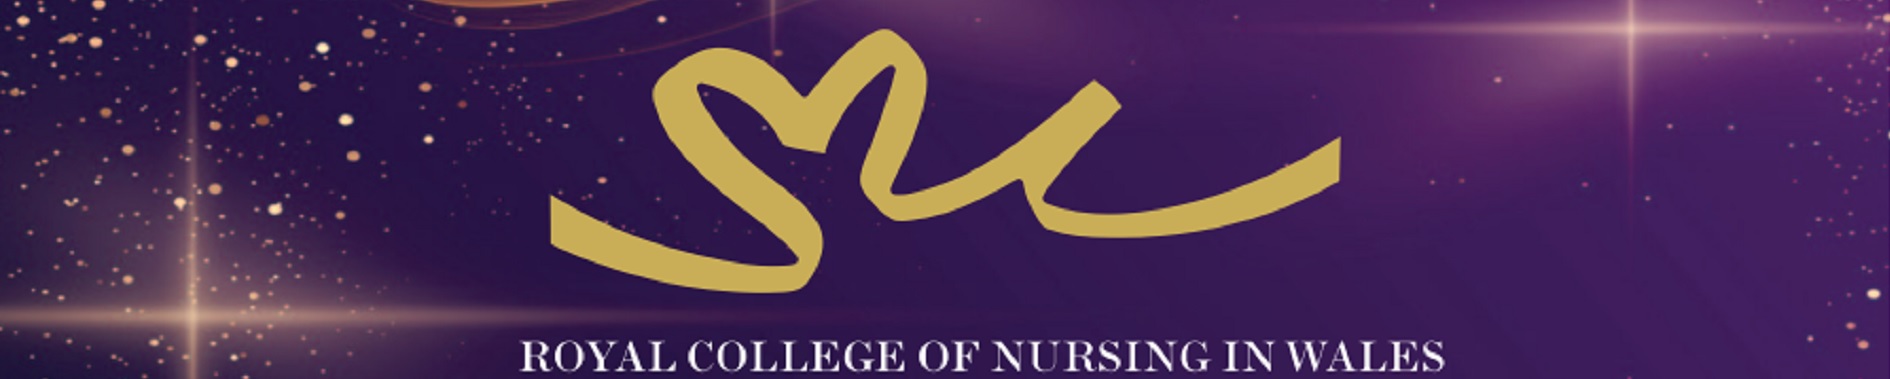 RCN Wales Nurse of the Year Awards logo banner